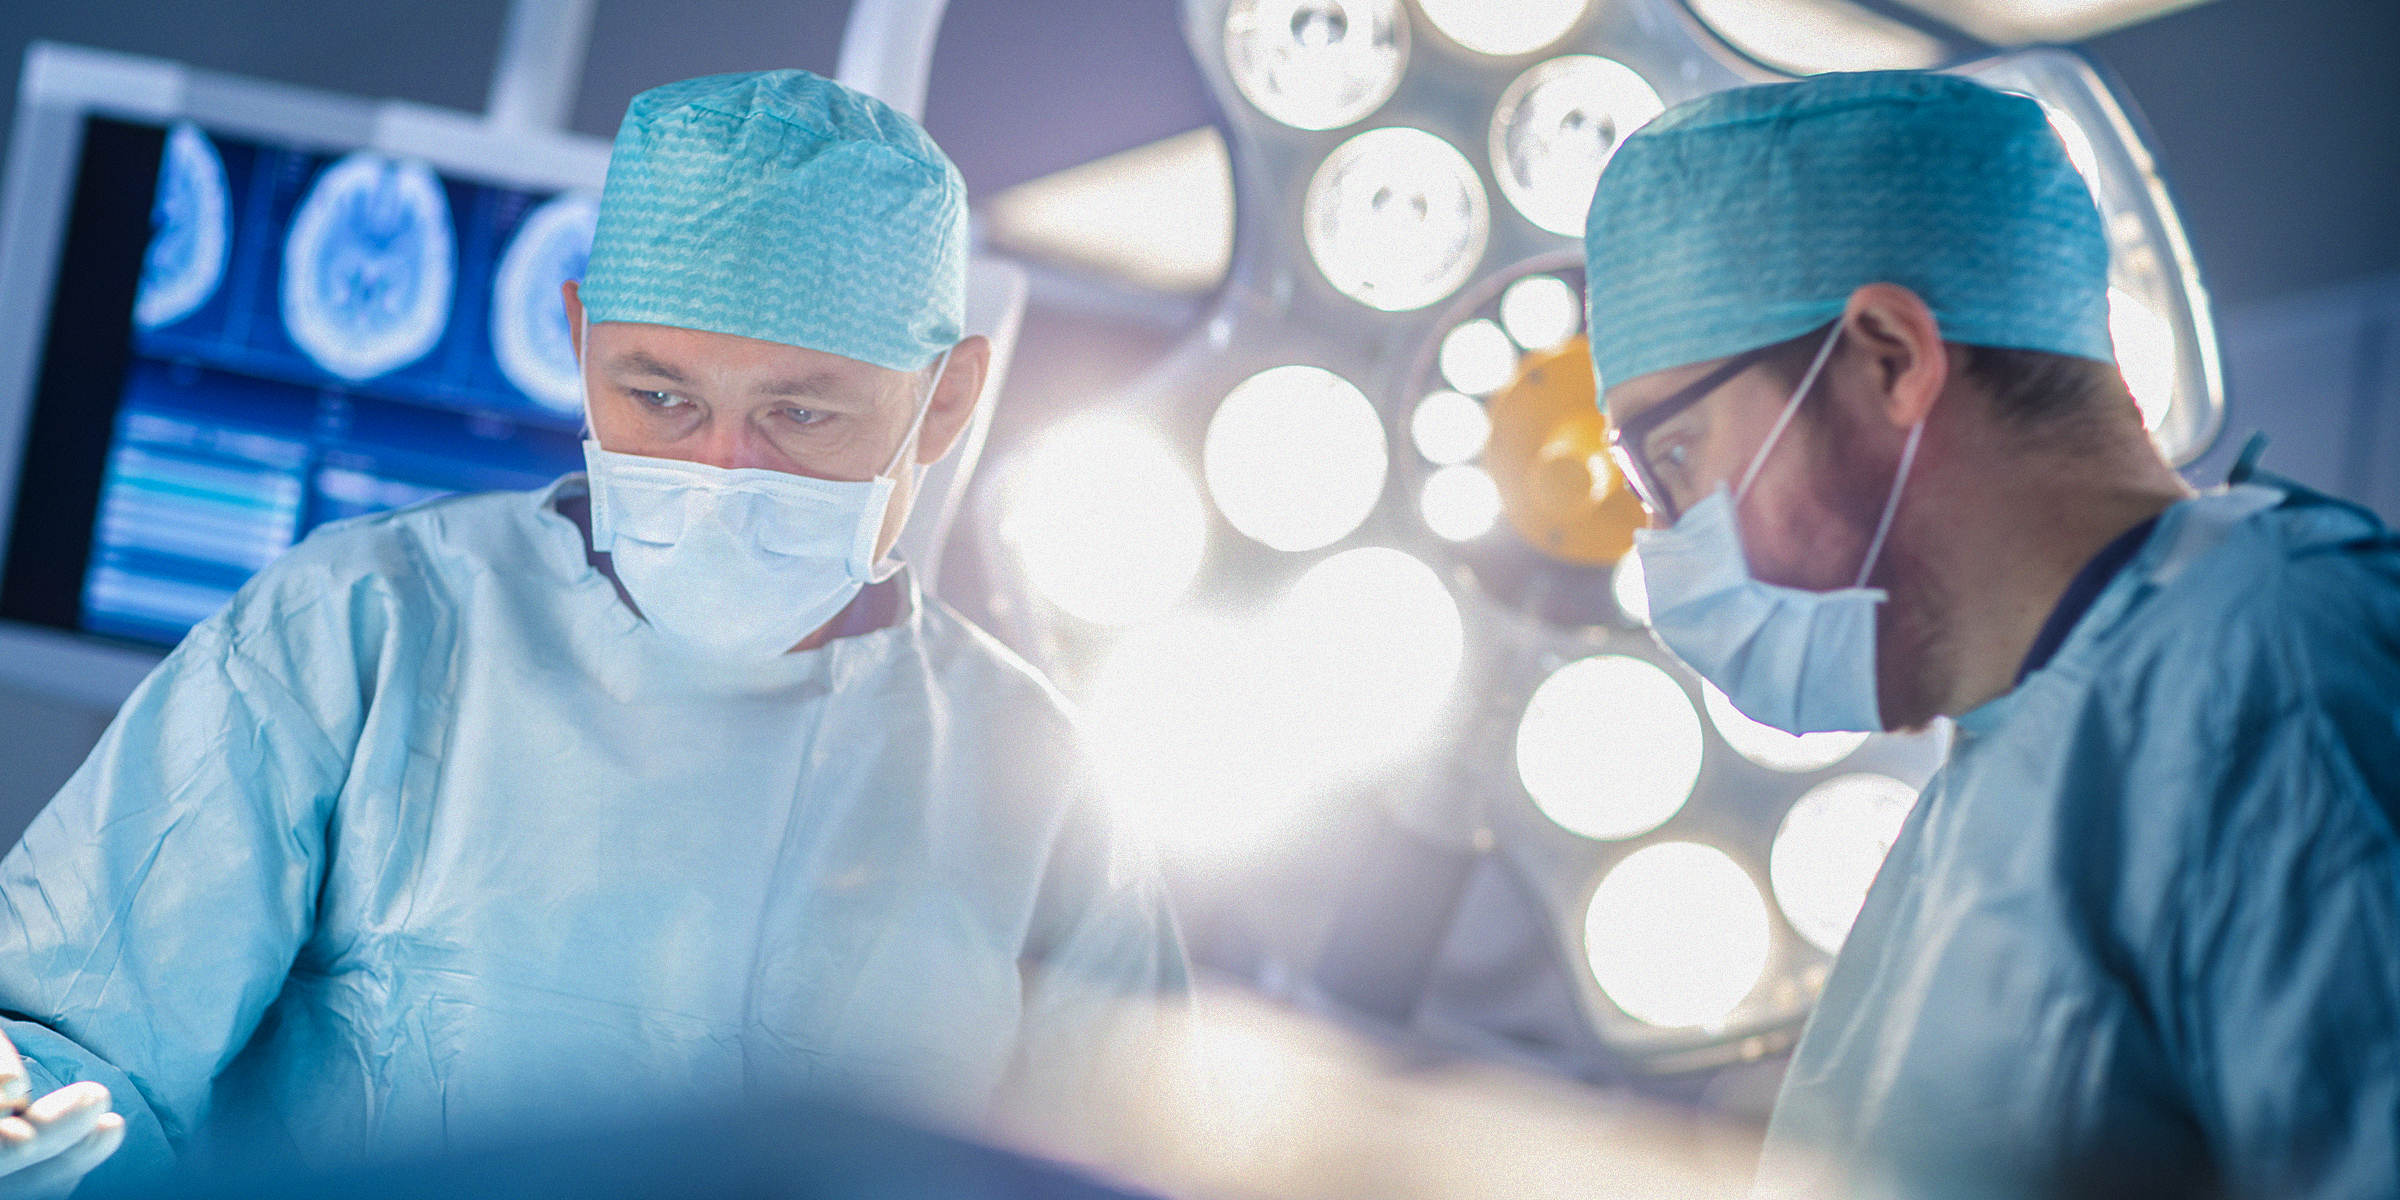 Des chirurgiens | Source : Shutterstock